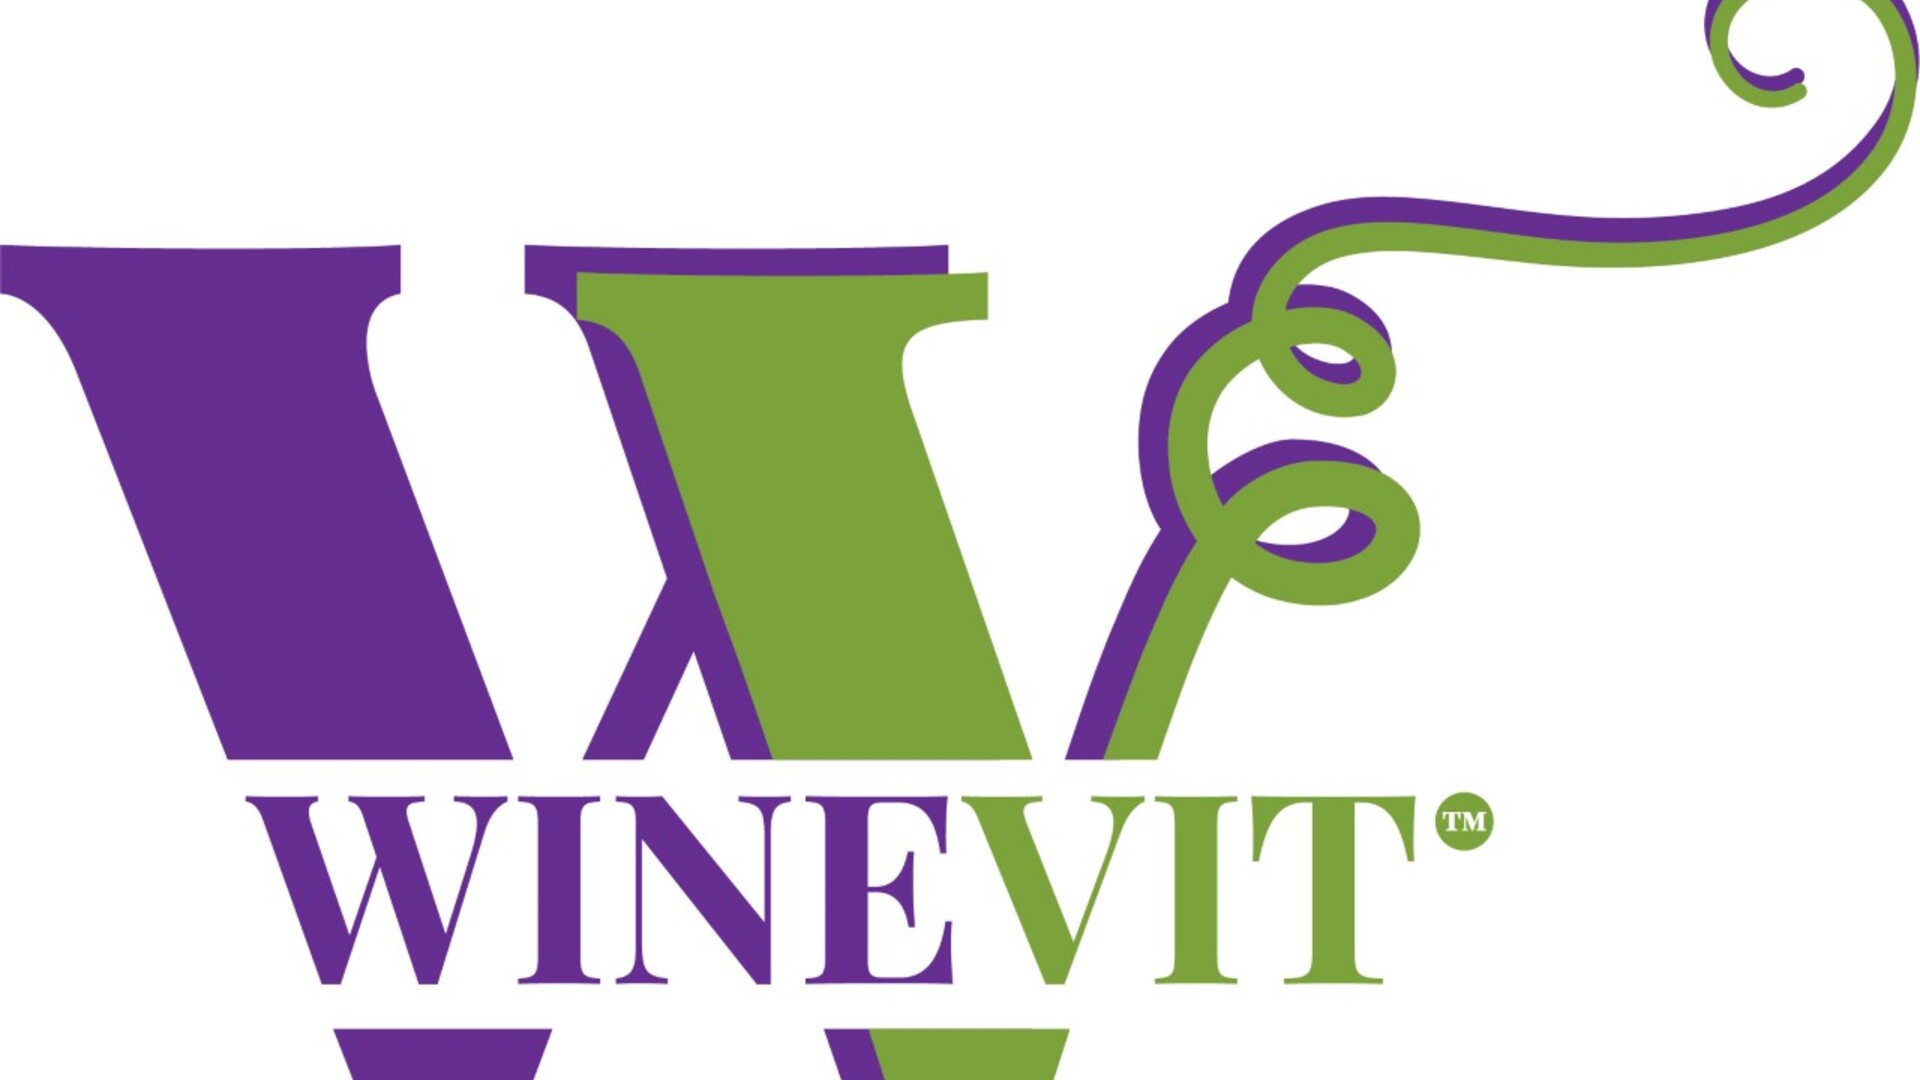 WineVit 2021 Pt1